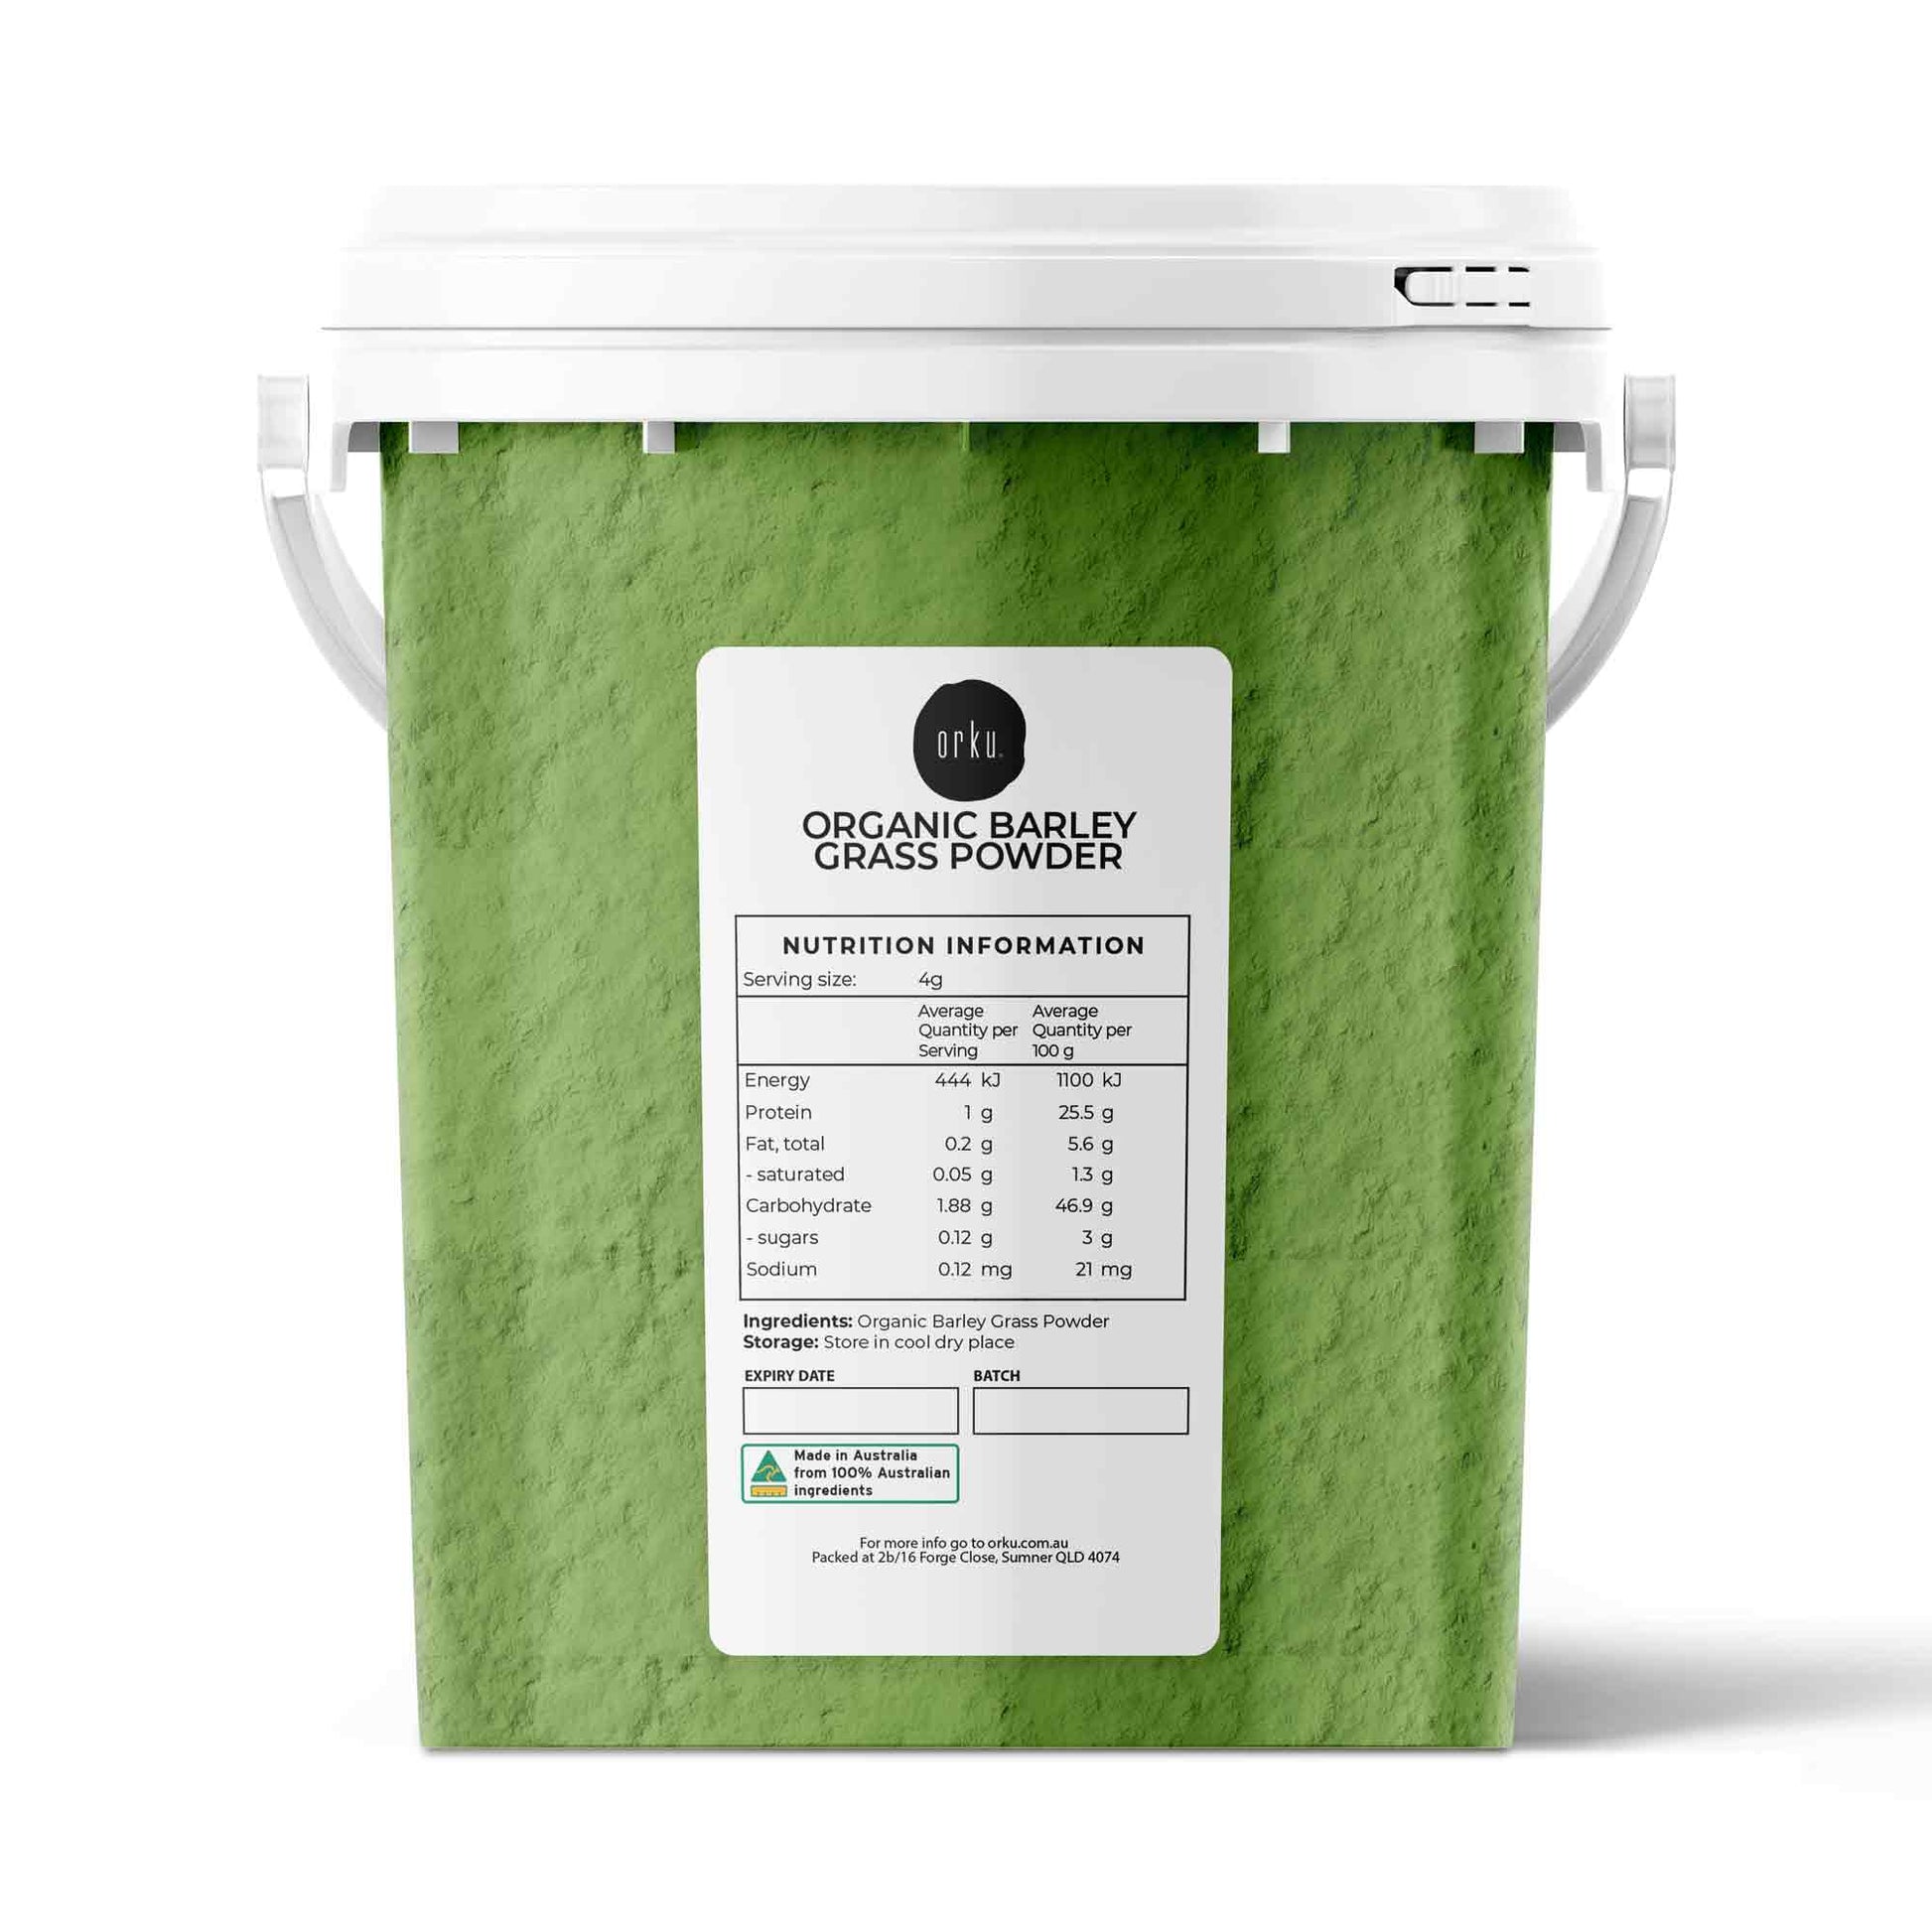 400g Organic Barley Grass Powder Tub Hordeum Vulgare Leaf Superfood Supplement